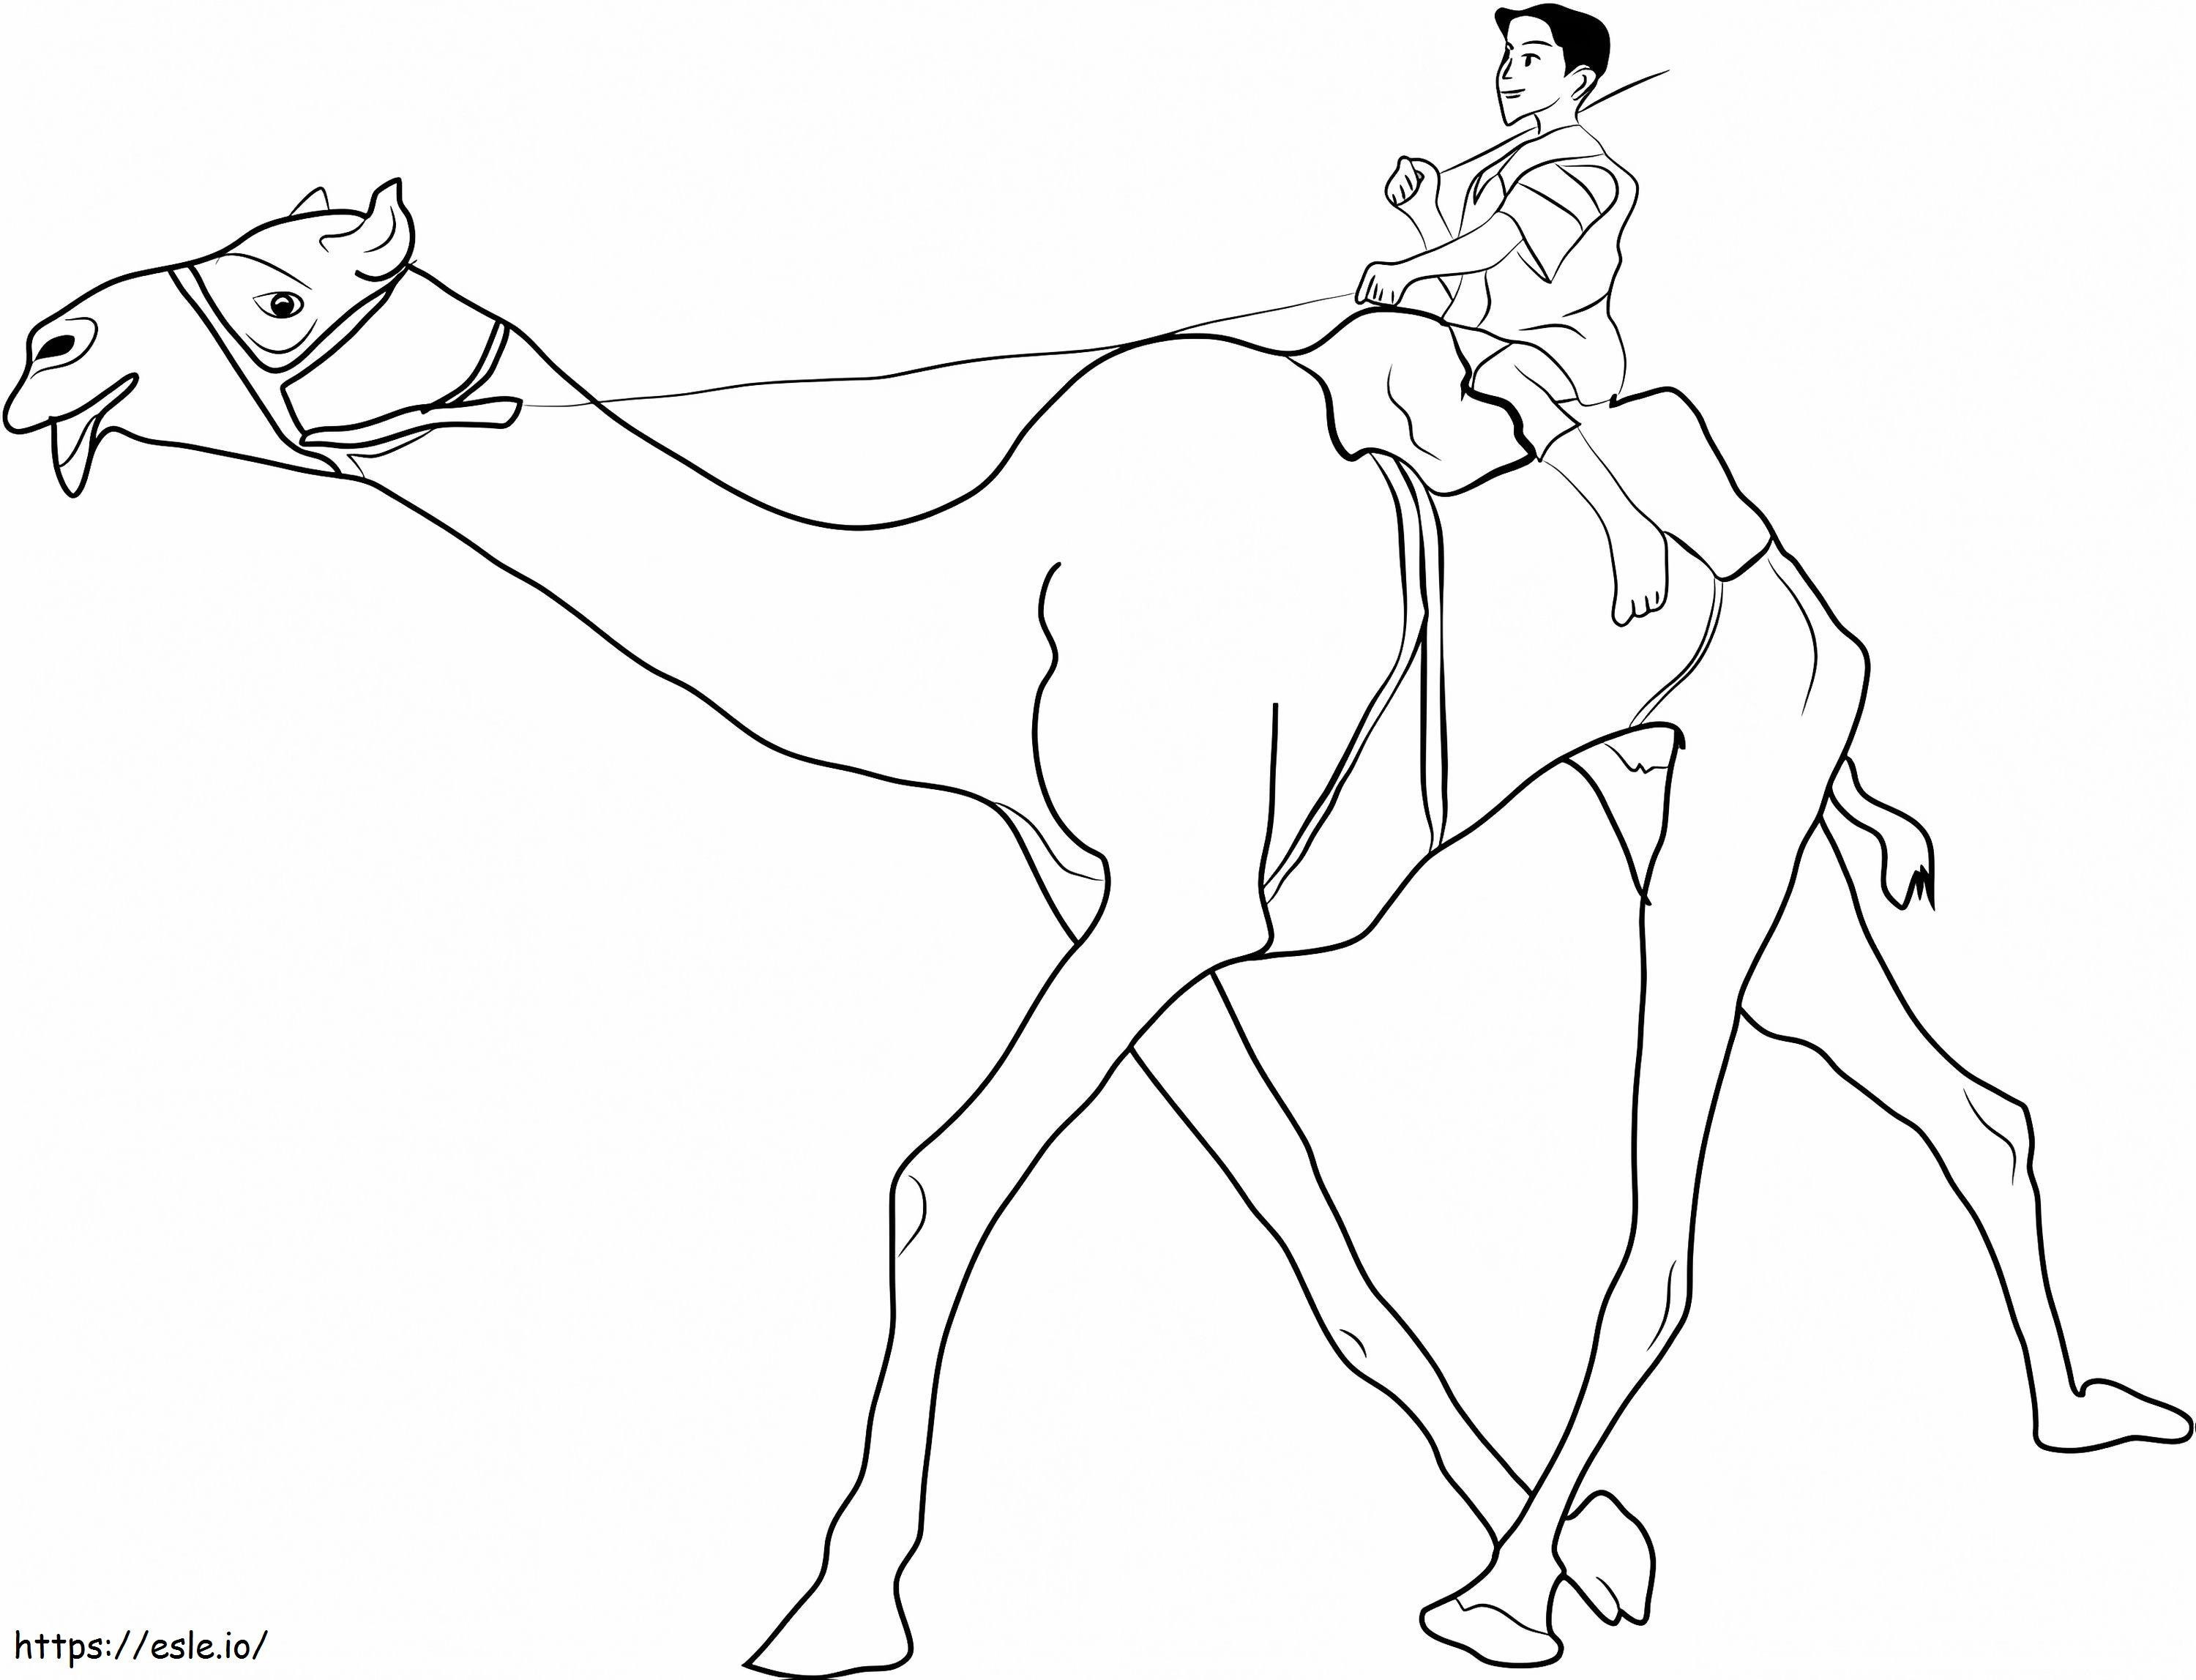  Mann reitet Kamel A4 ausmalbilder